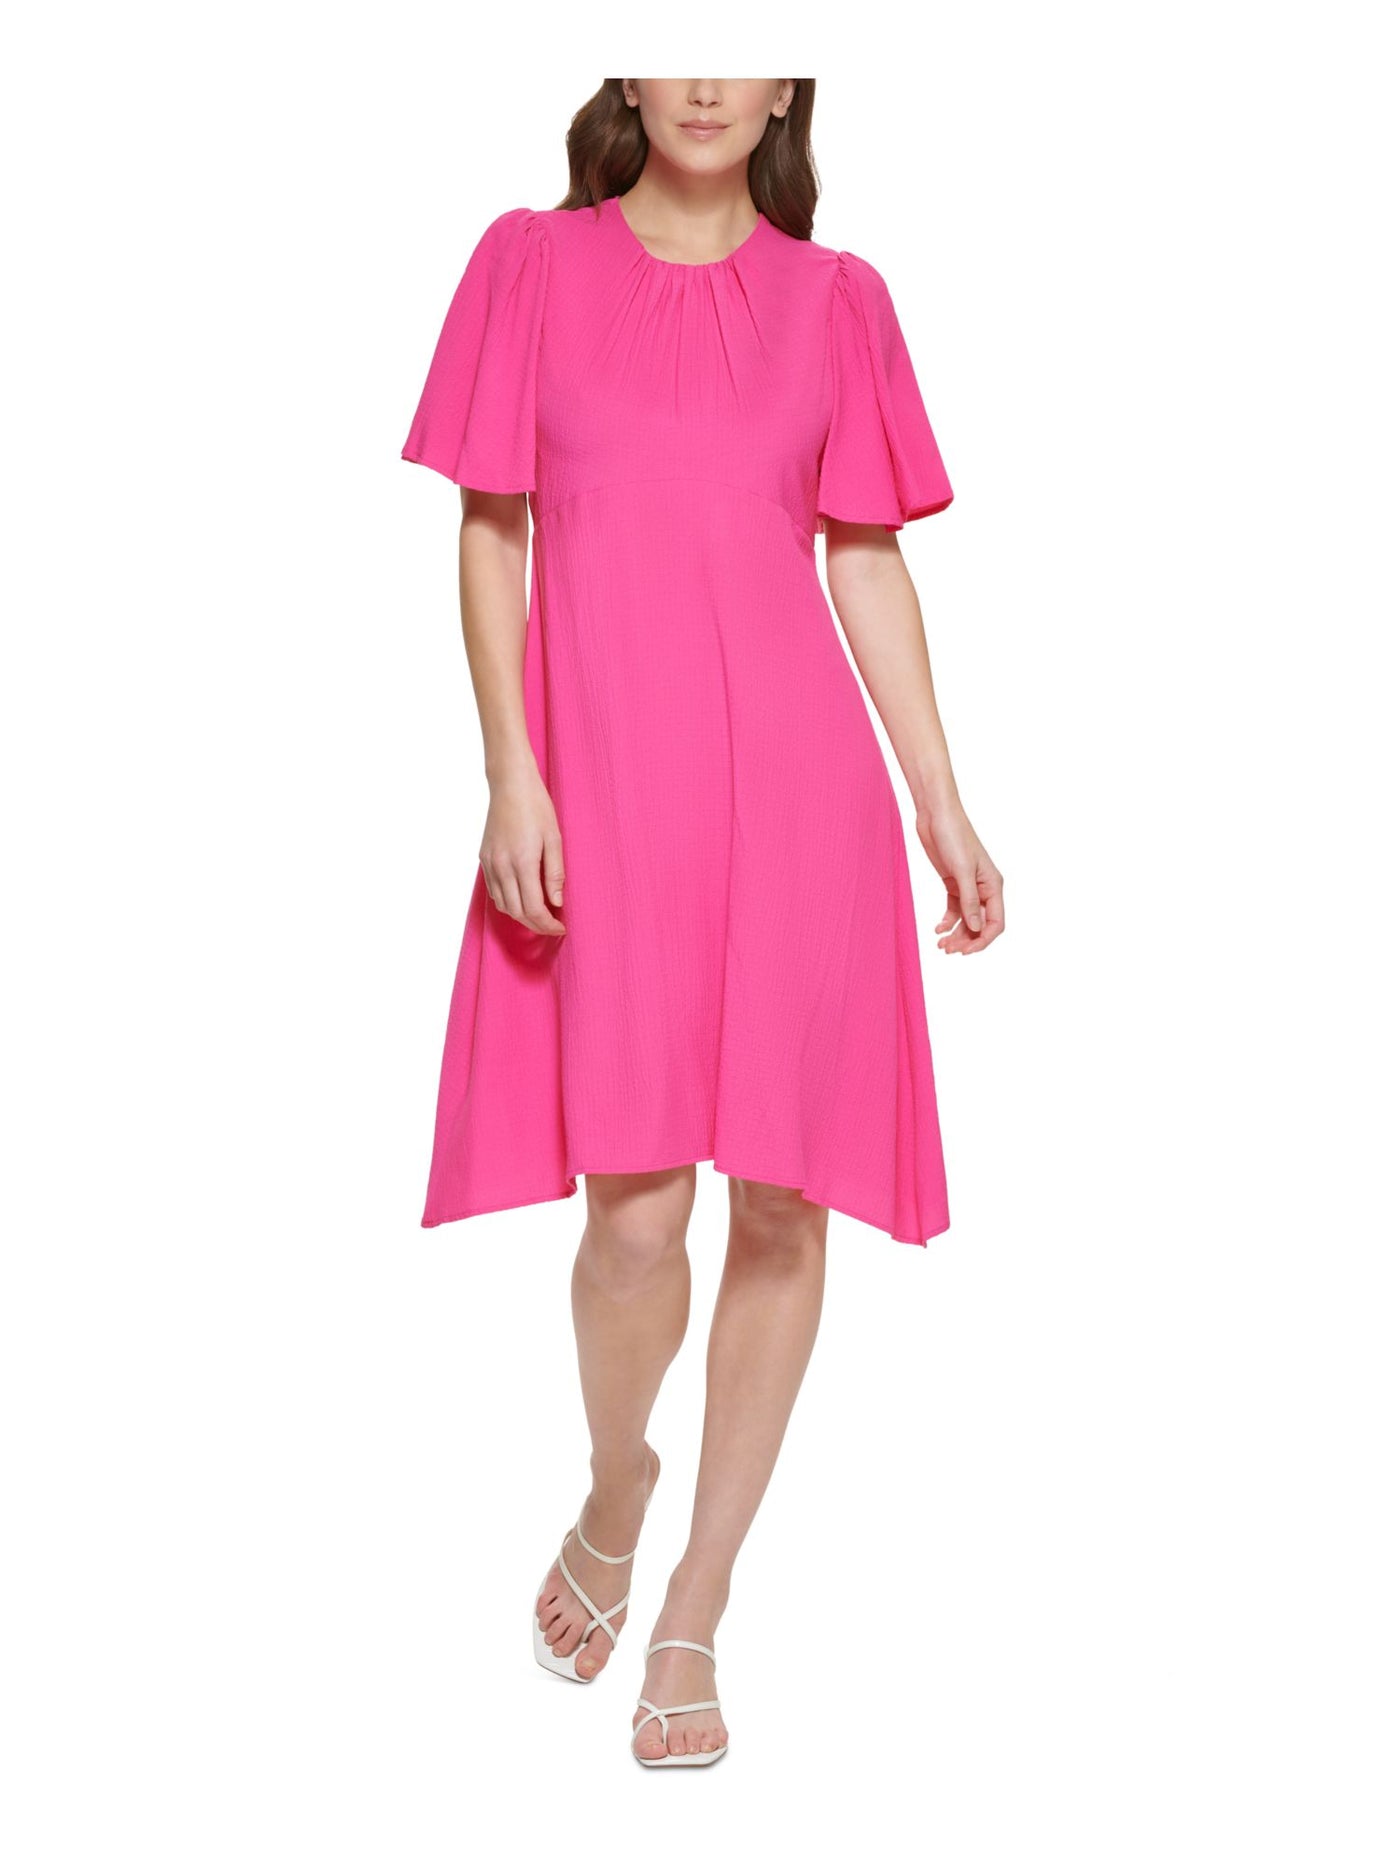 CALVIN KLEIN Womens Pink Textured Zippered Gathered Flutter Sleeve Round Neck Knee Length Party Sheath Dress 10